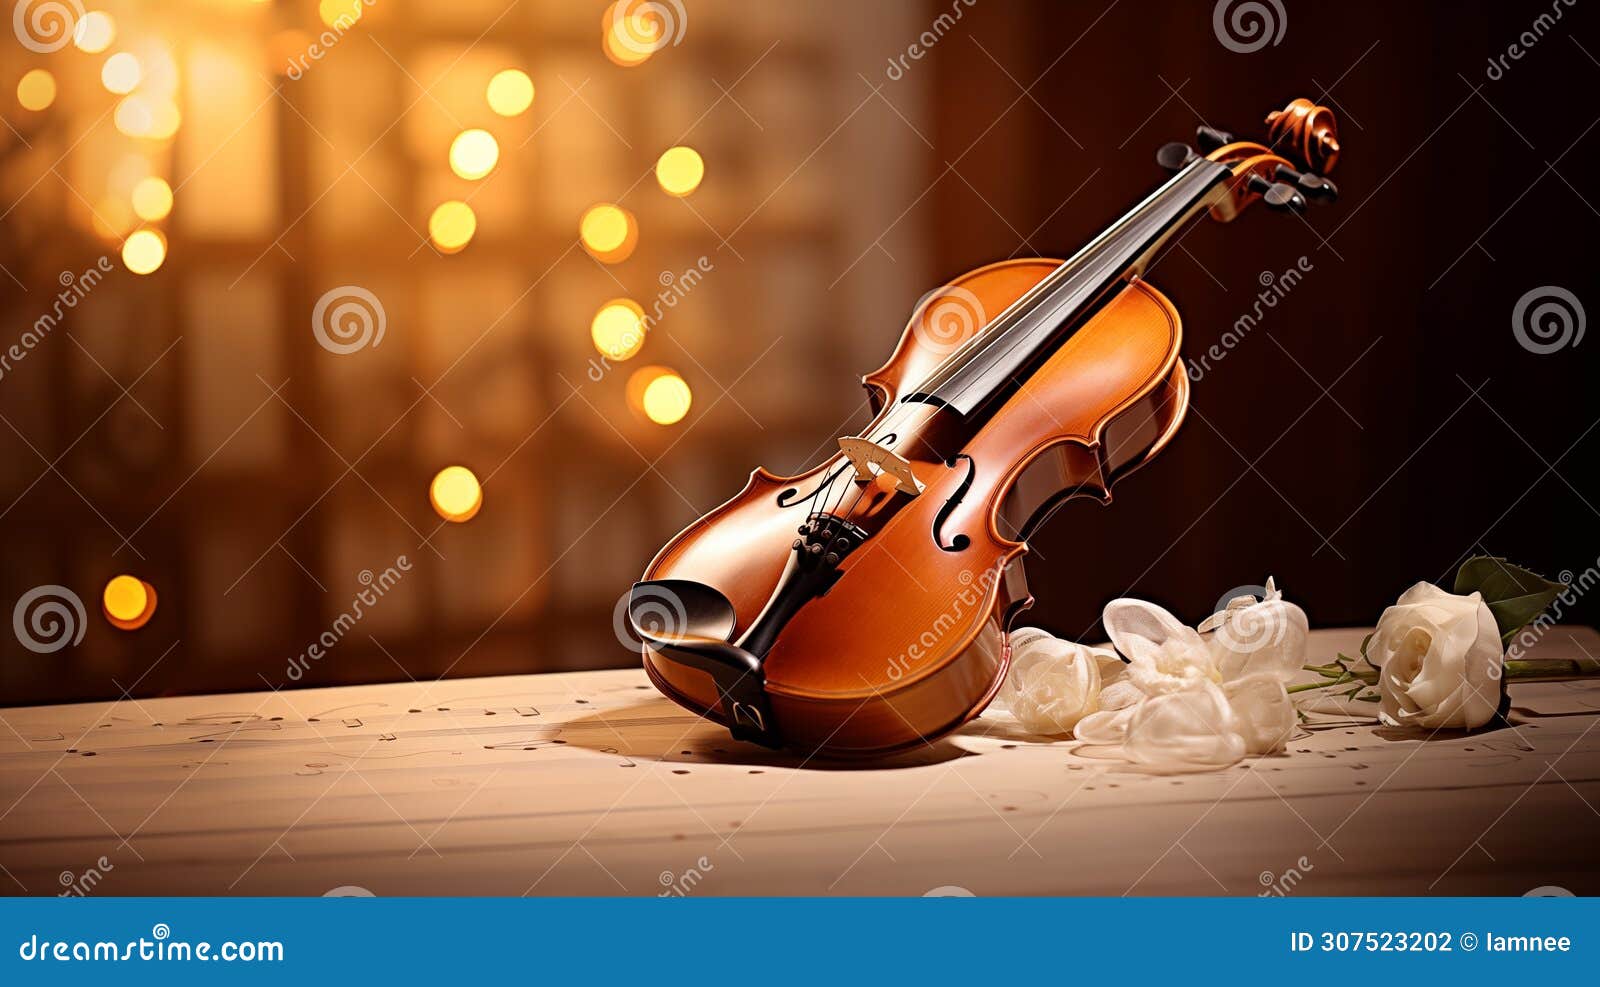 beautiful violin awaits its rightful musician counterpart.ai generated